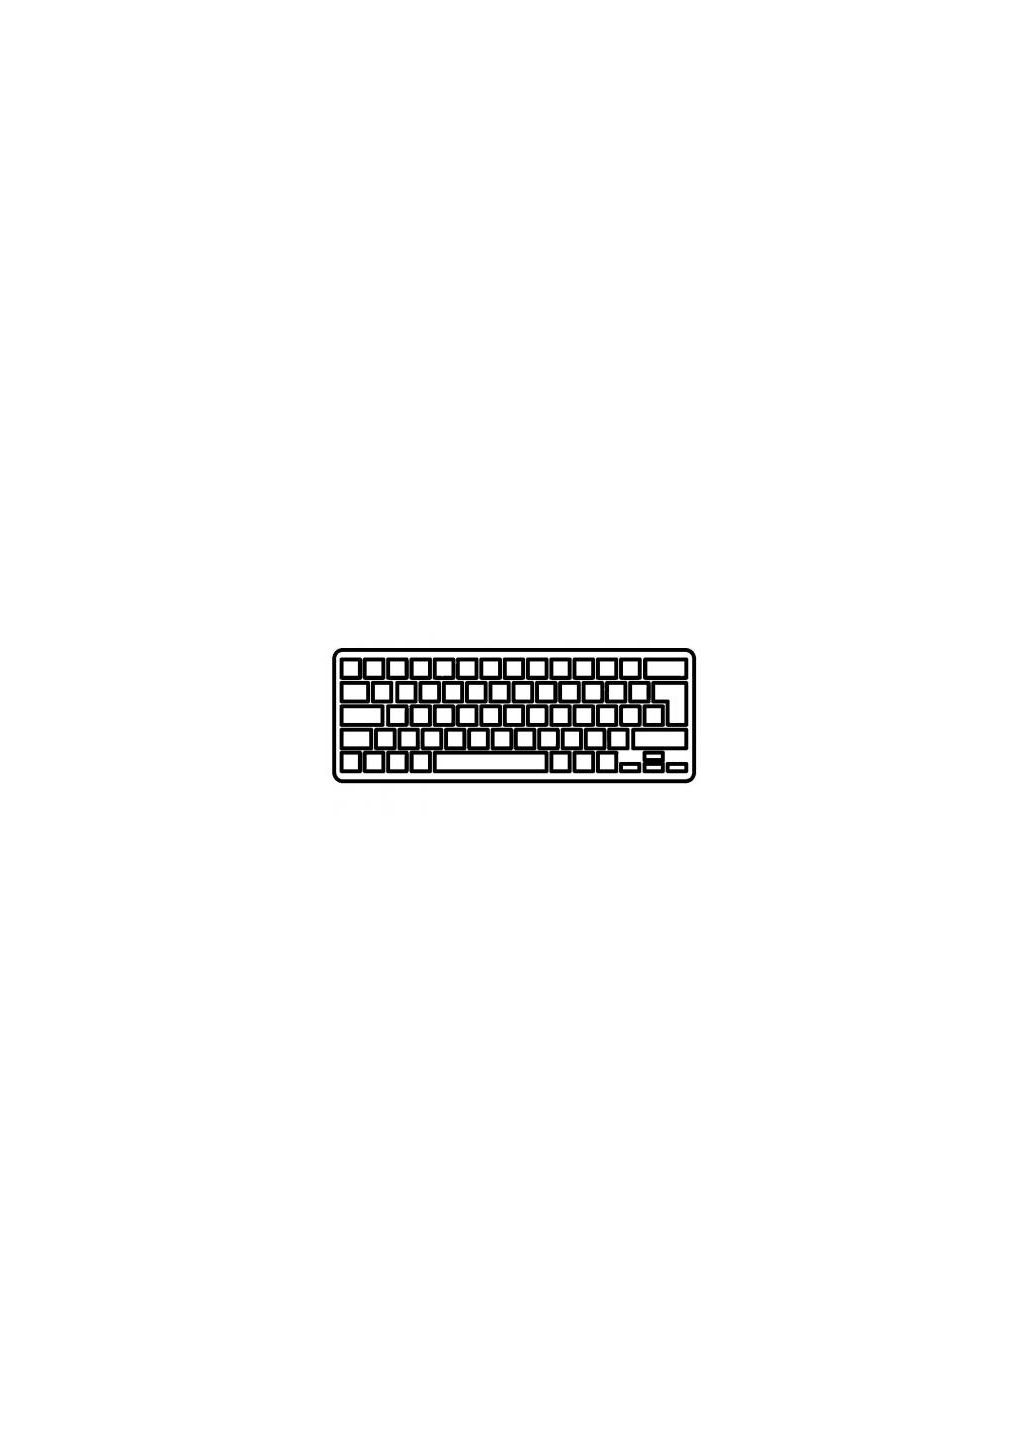 Клавиатура ноутбука NA1/QA1/QA4/E265M/E-475M черная UA/RUUS (A43313) GateWay na1/qa1/qa4/e-265m/e-475m черная ua/ruus (276707445)